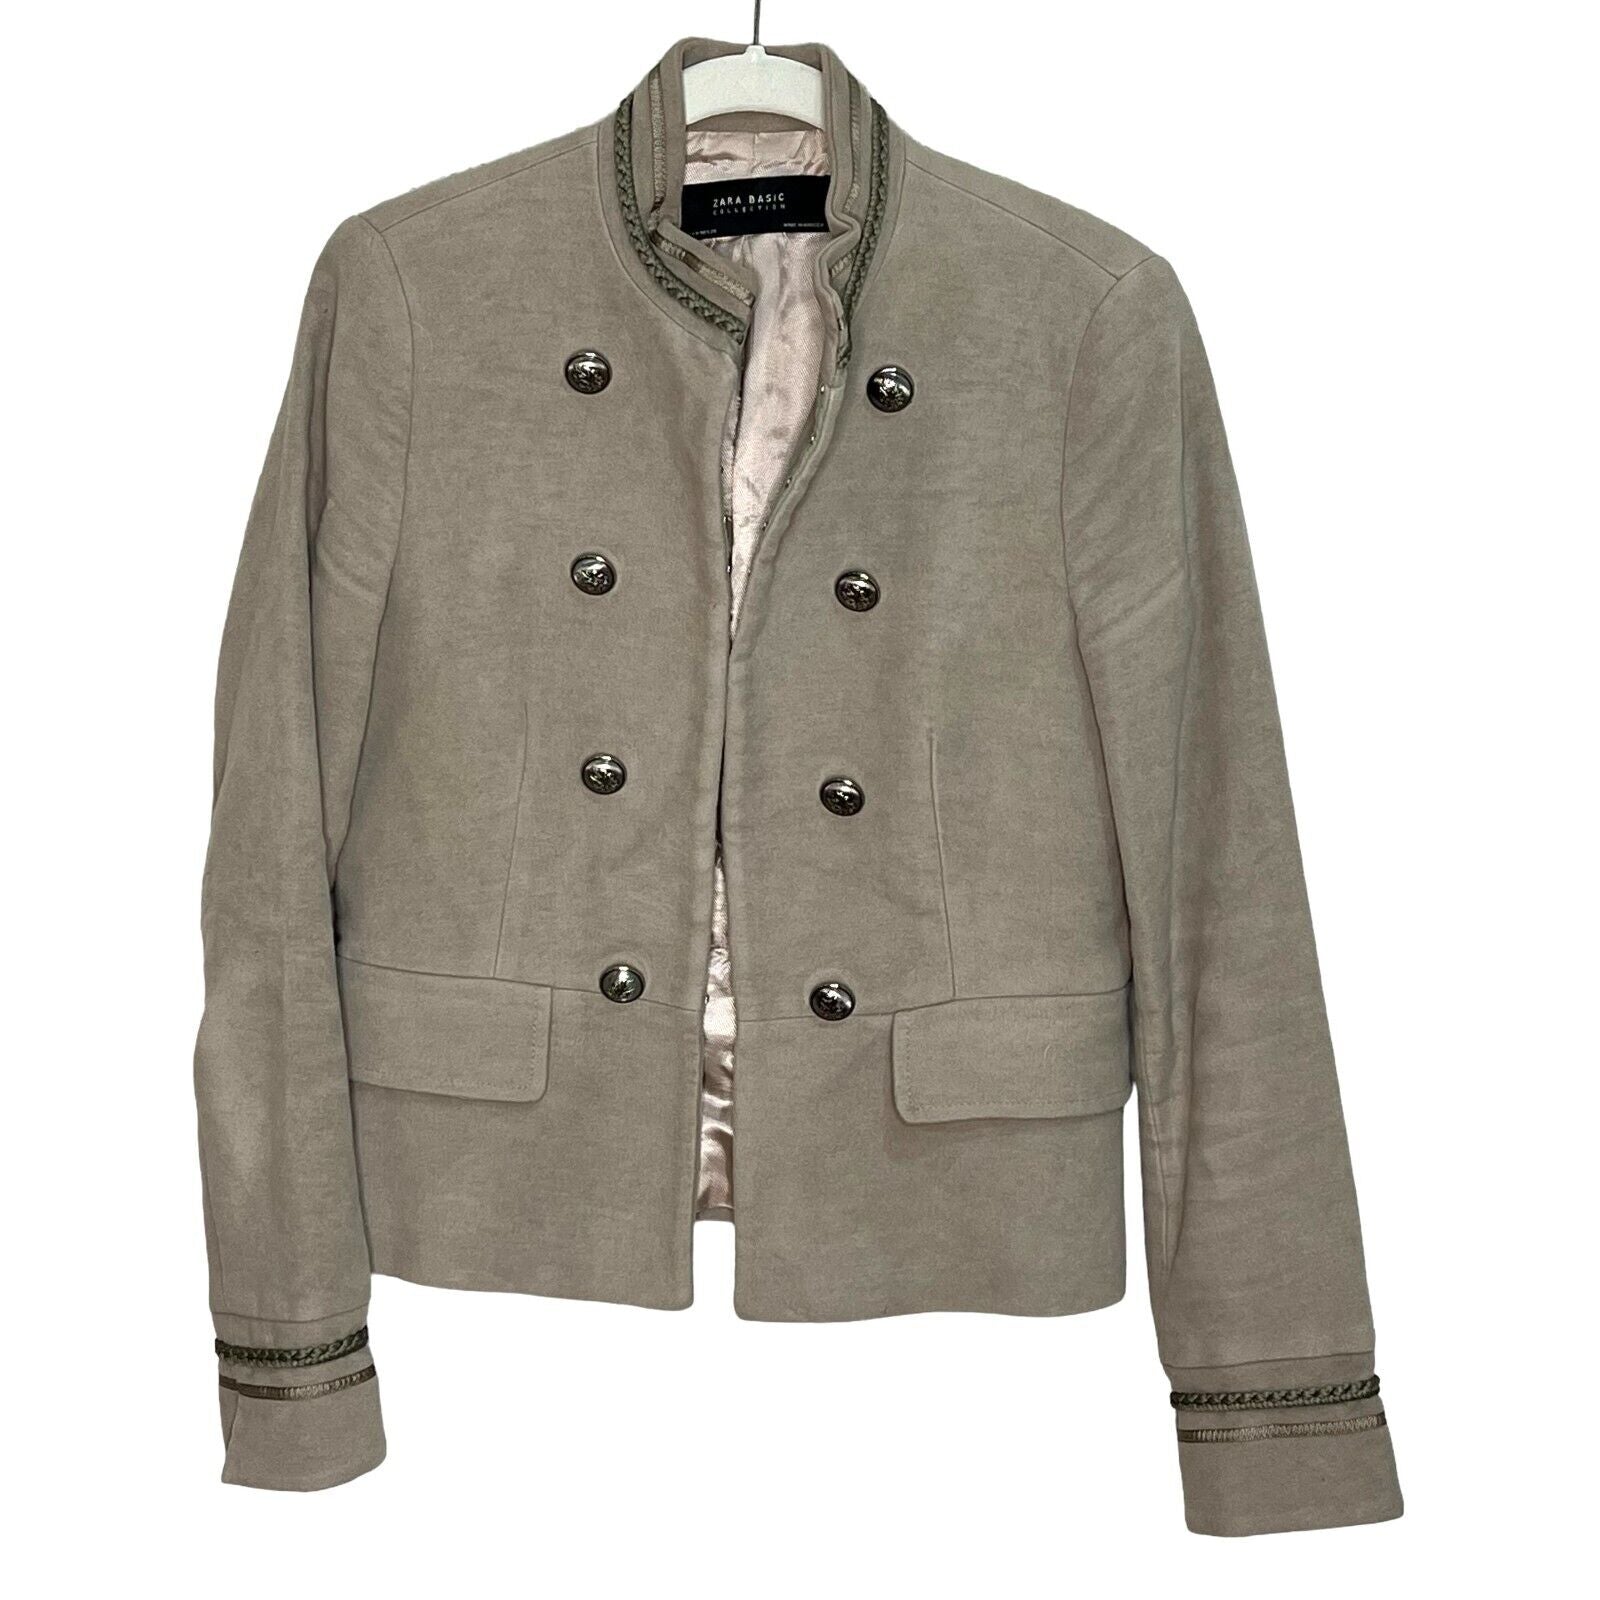 Zara Basic Collection Tan Military Jacket Blazer Size Medium